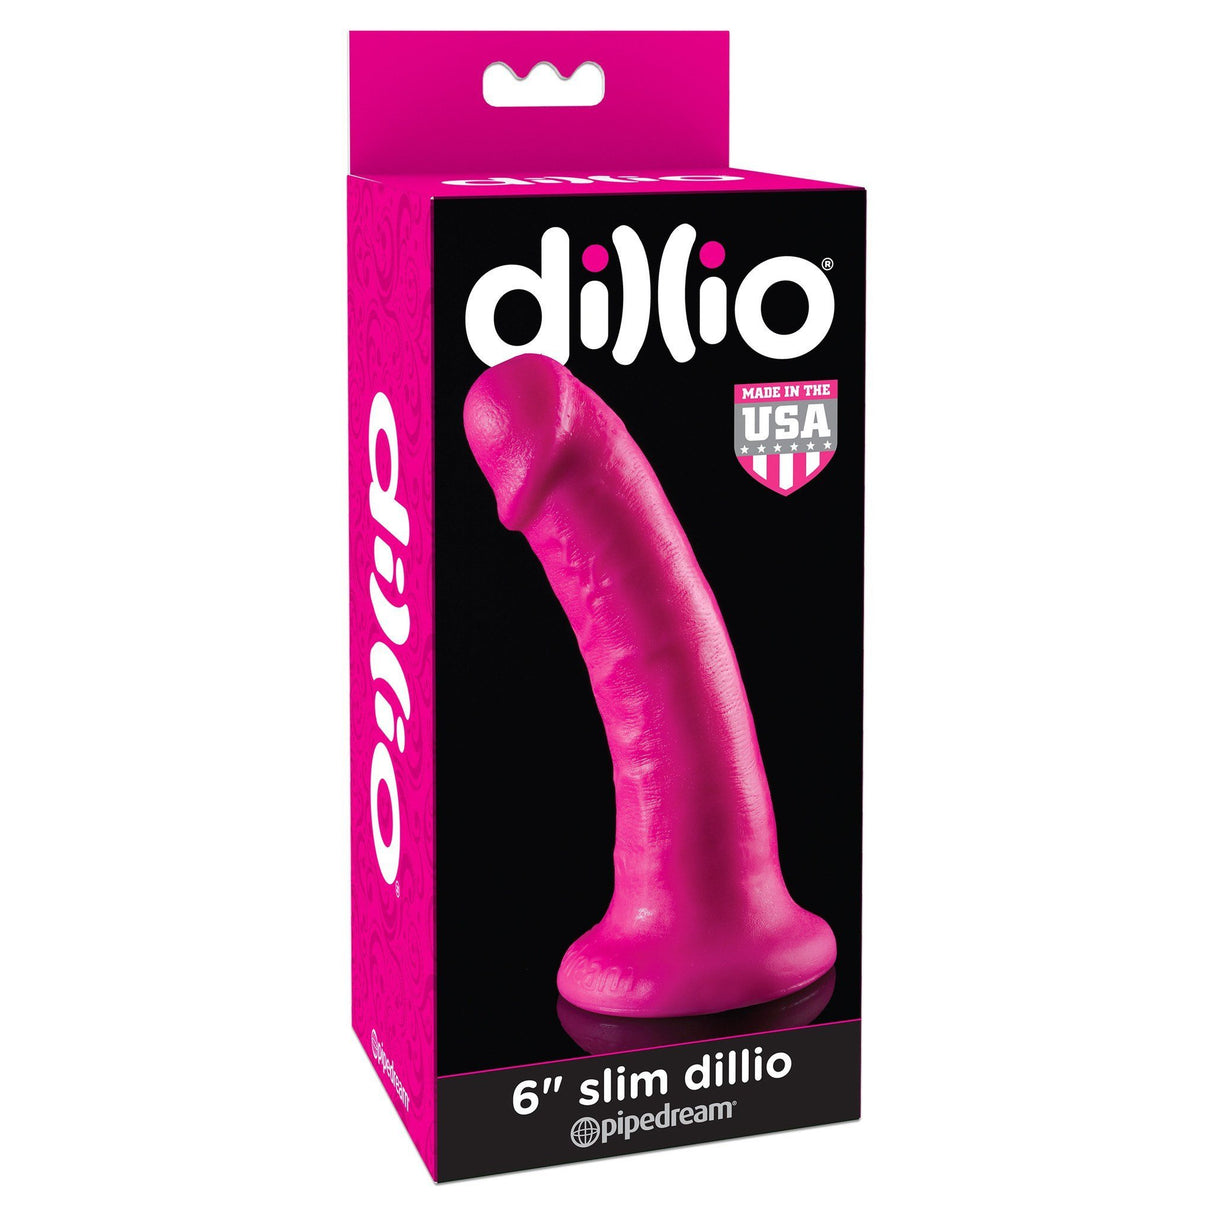 Pipedream - Dillio 6" Slim Dillio Dildo (Pink) PD1525 CherryAffairs